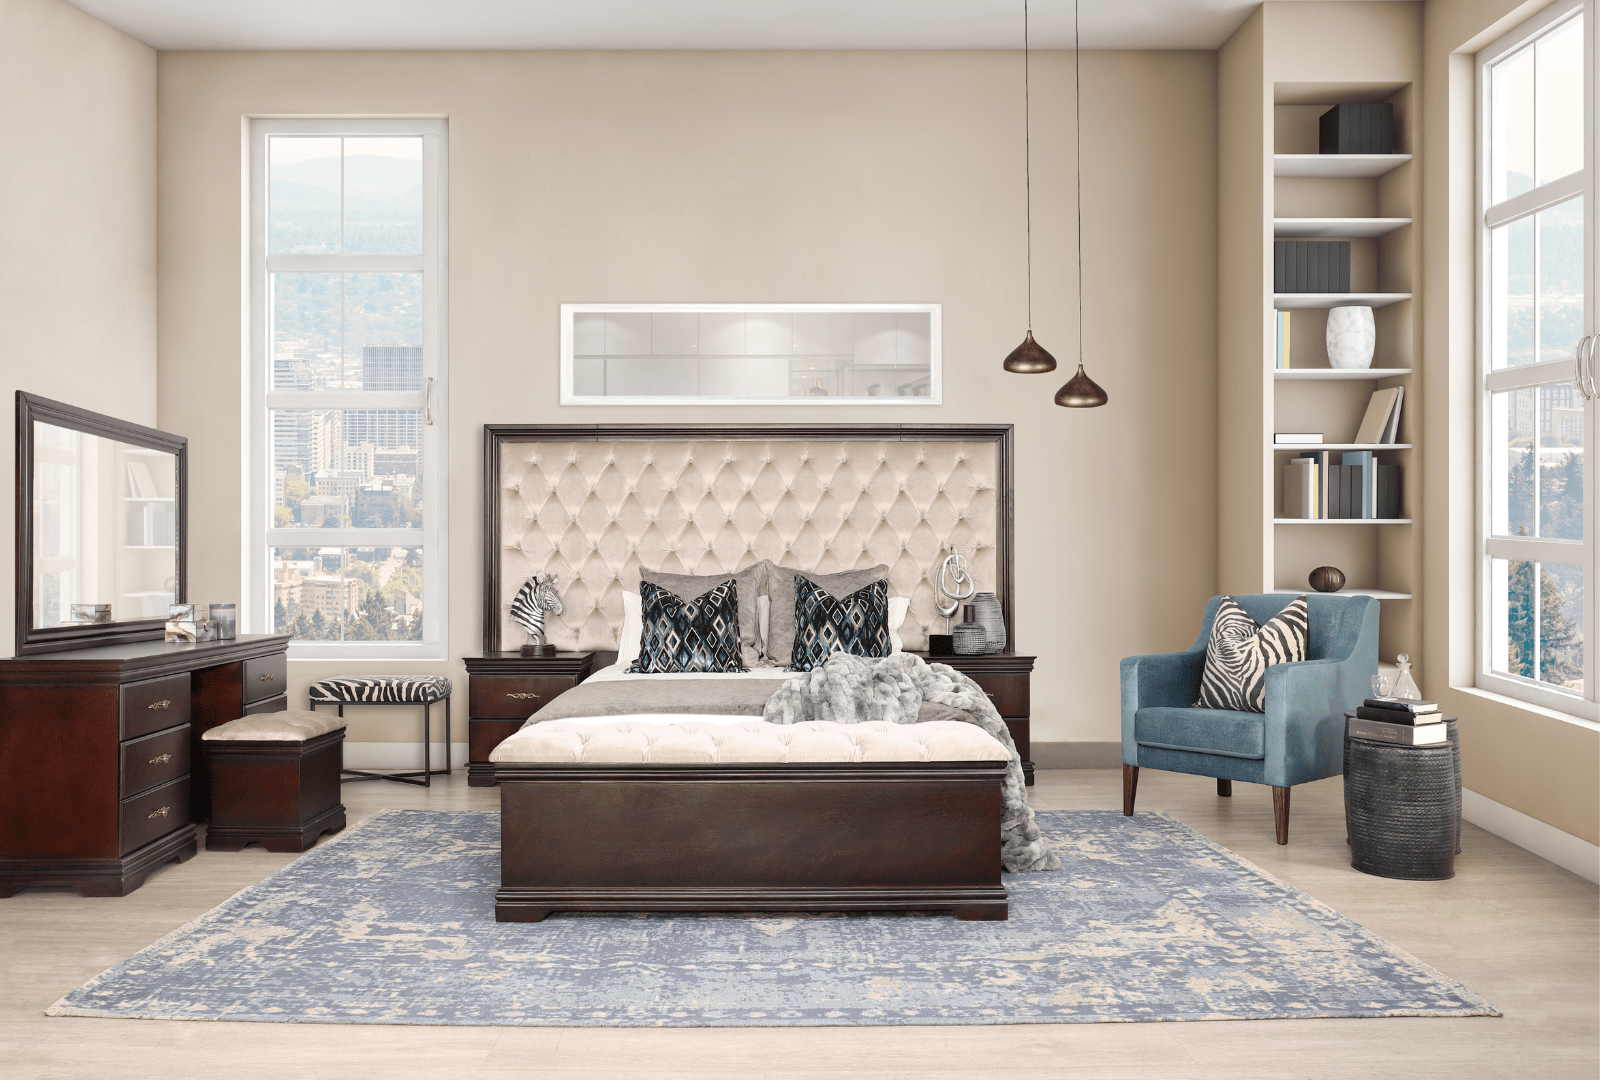 Elegant and Durable Bedroom Furniture: Introducing the Diana Bedroom Range